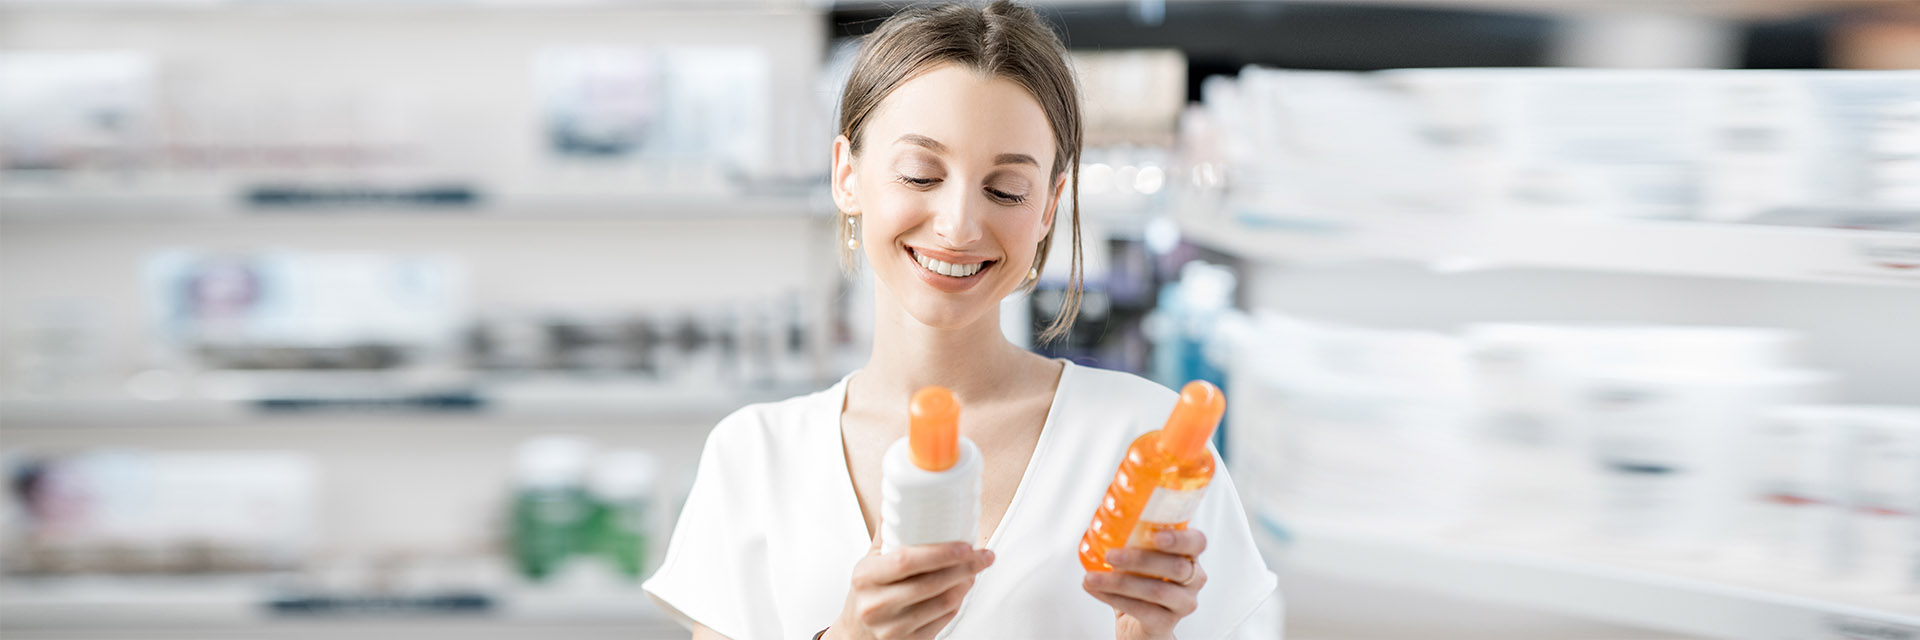 Woman choosing sunscreen at pharmacy